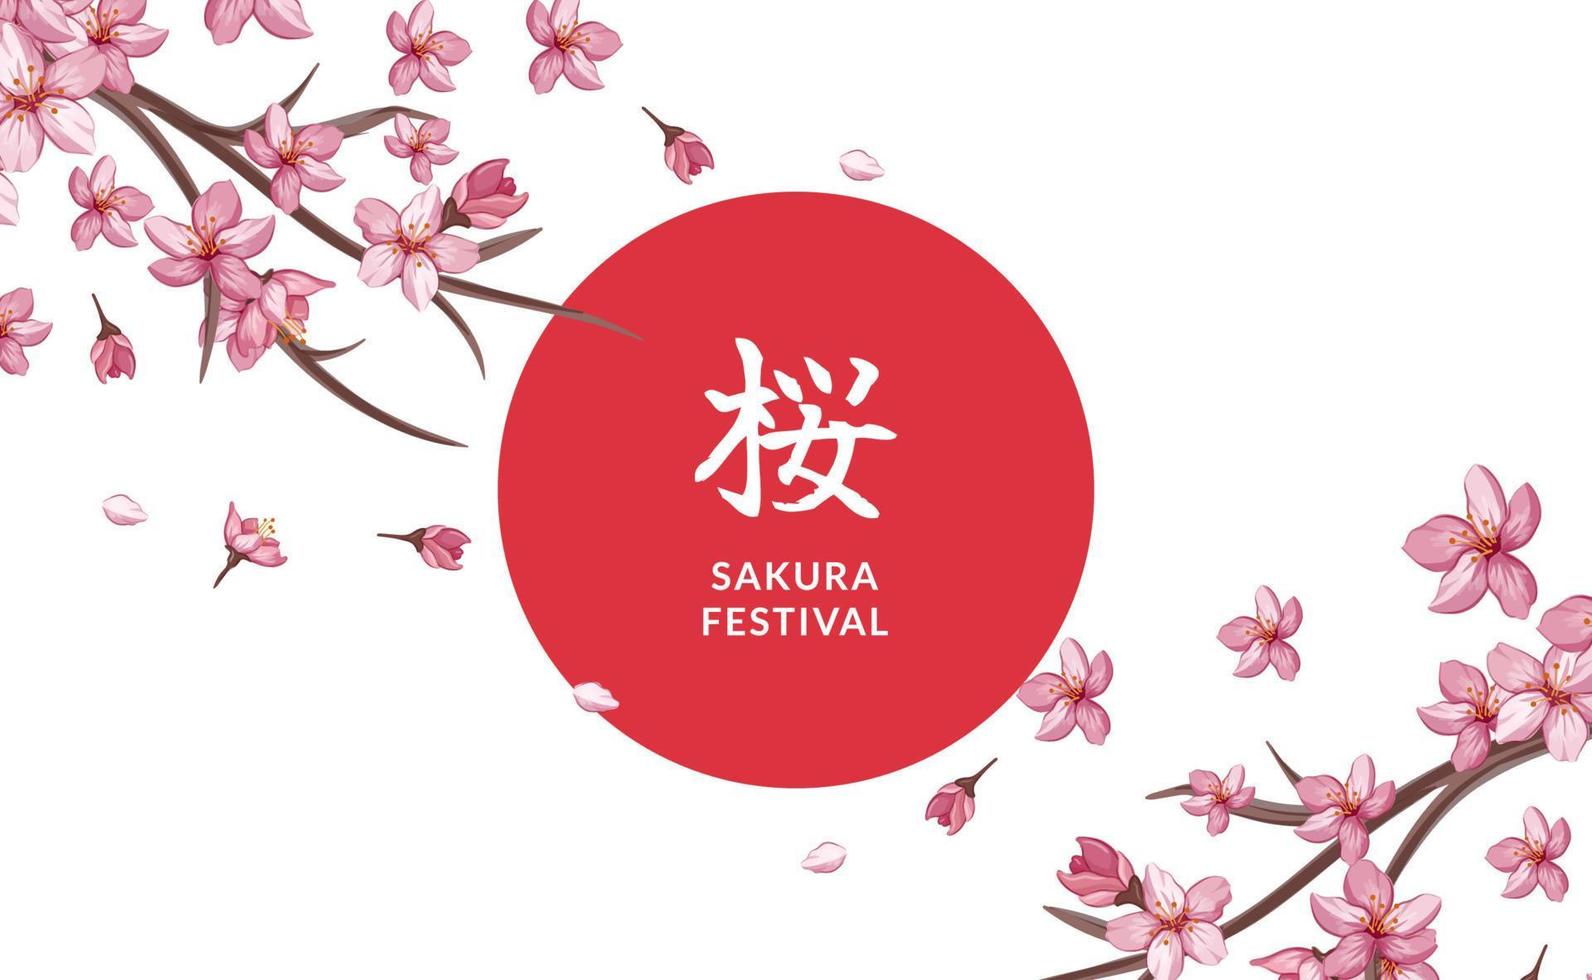 Sakura Flower Cherry blossom natural japan asian tour travel abroad poster banner greeting card vector